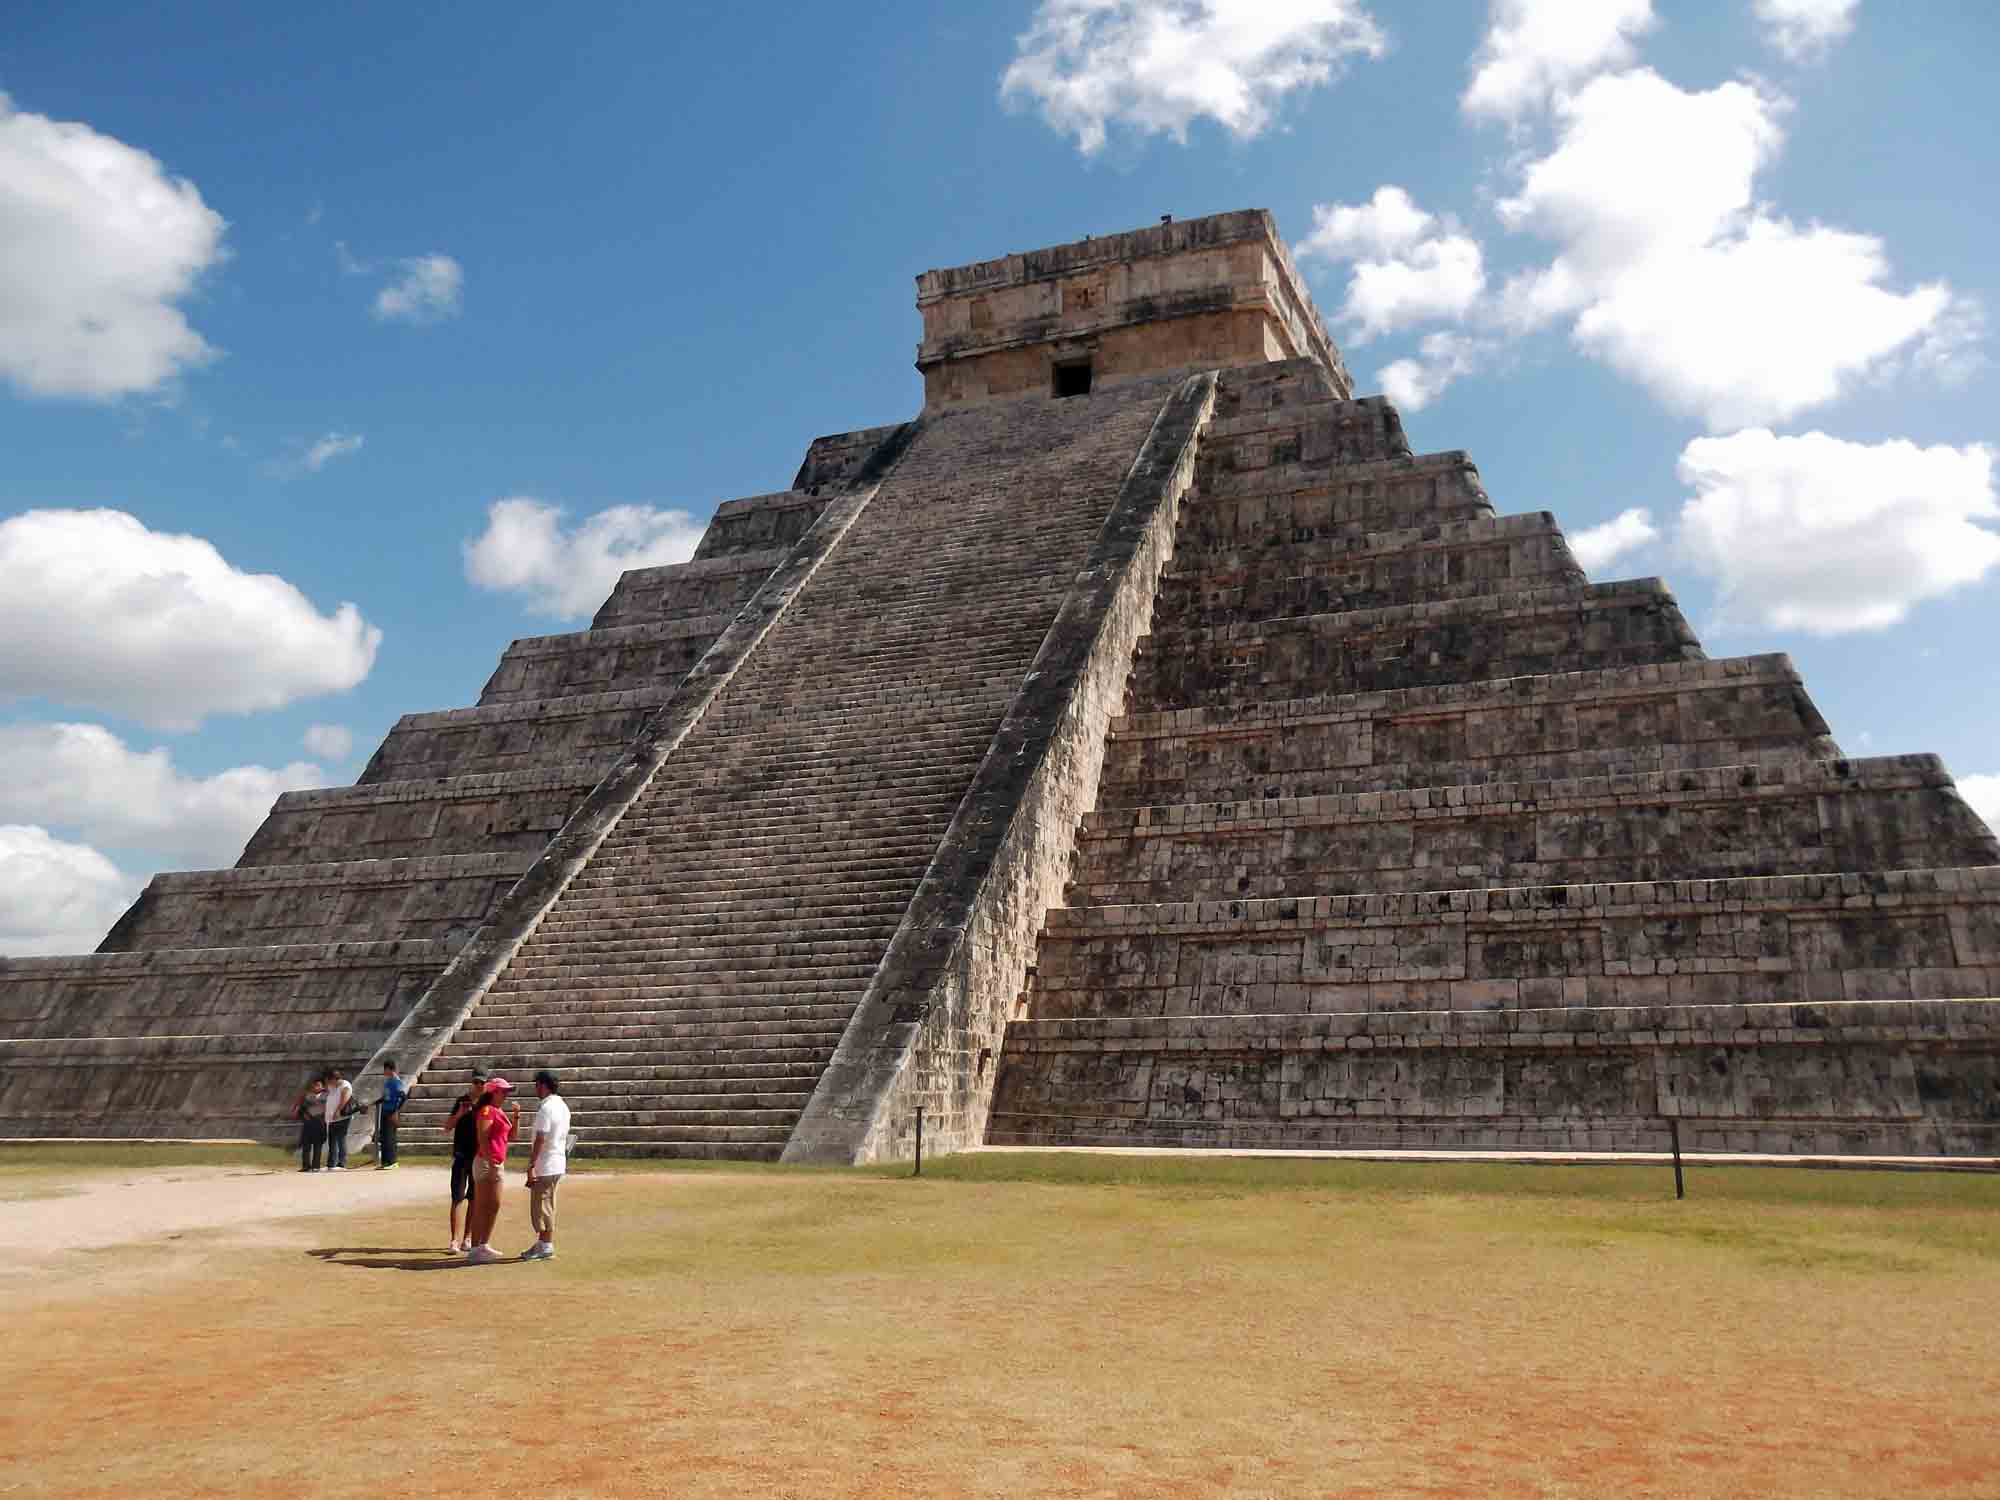 Mayan Temple at Chichen Itzma